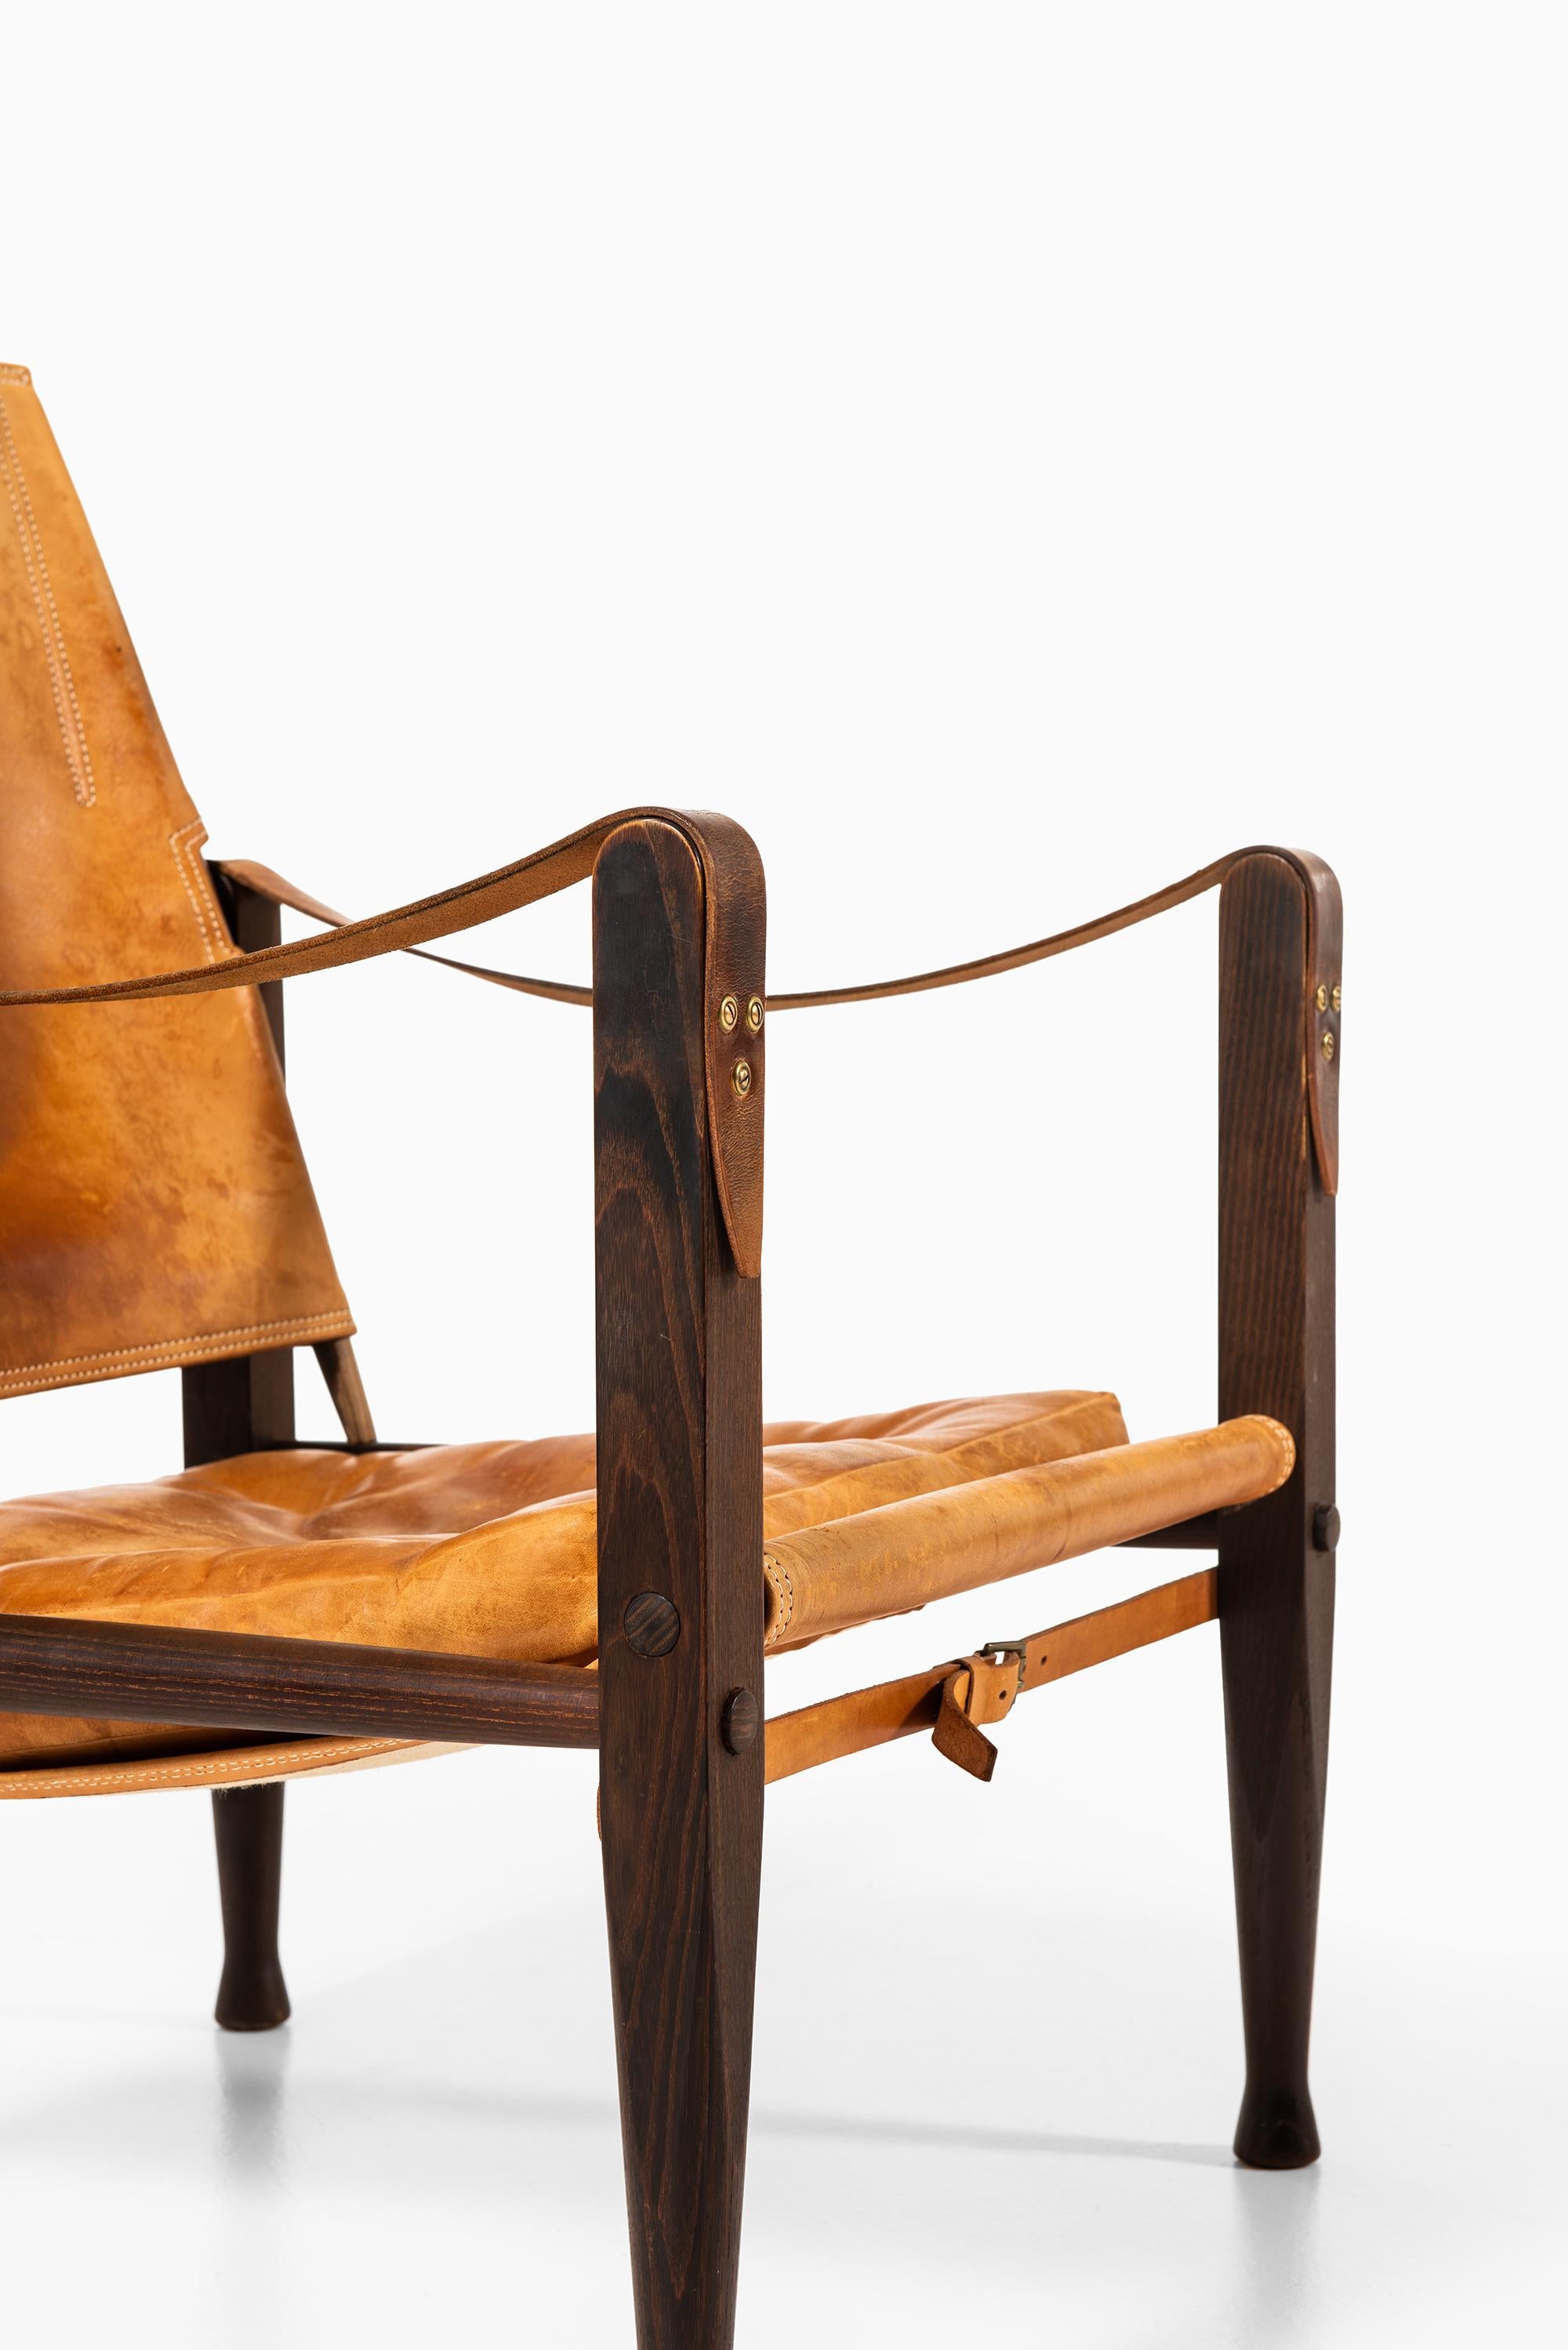 Rare safari chair designed by Kaare Klint. Produced by Rud Rasmussen in Denmark.